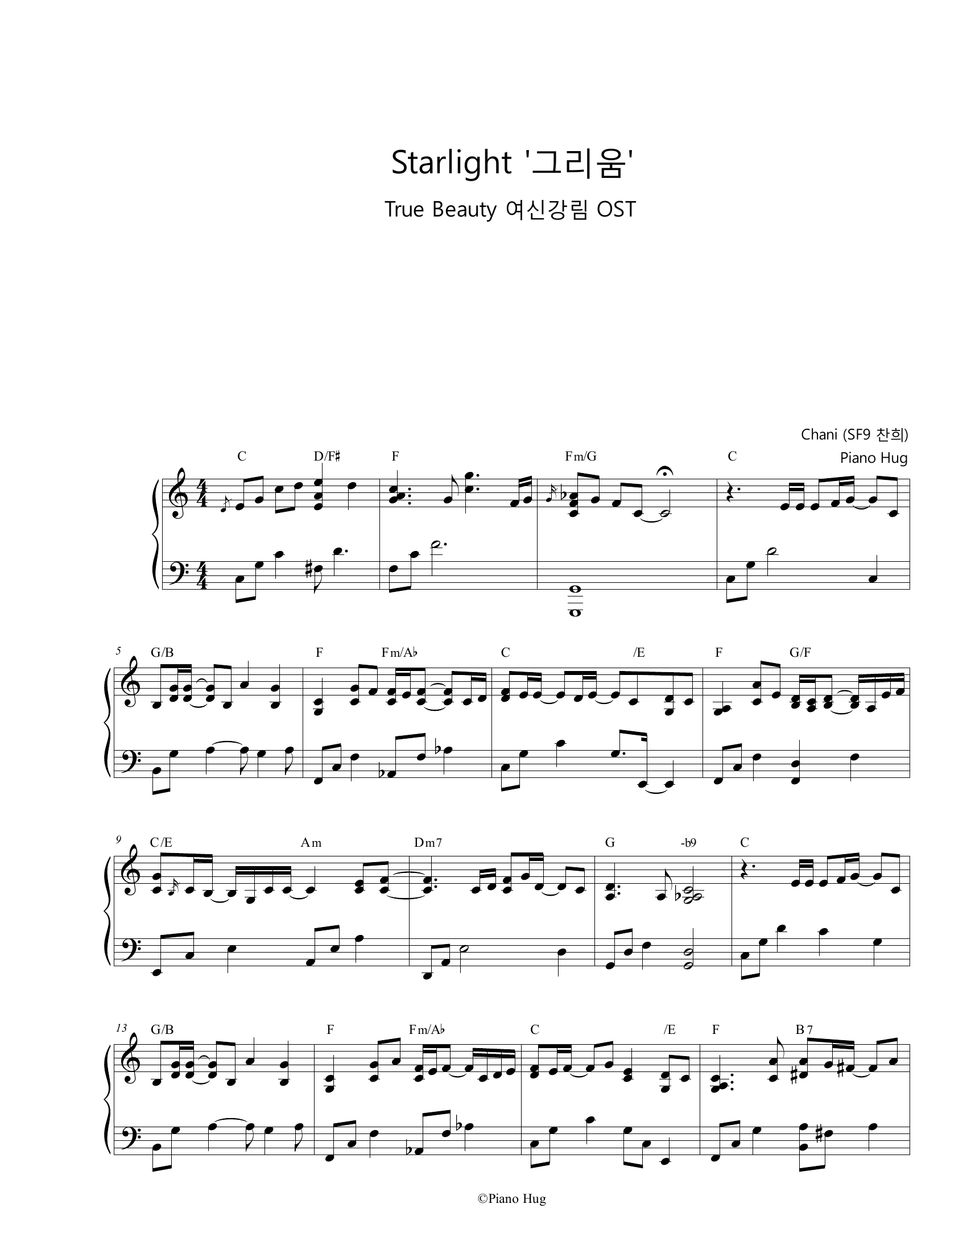 S 9 starlight. Muse Starlight на фортепиано. Chani Starlight кириллизация. Chani Starlight текст. Starlight - Chani [sf9] true Beauty OST Автор.